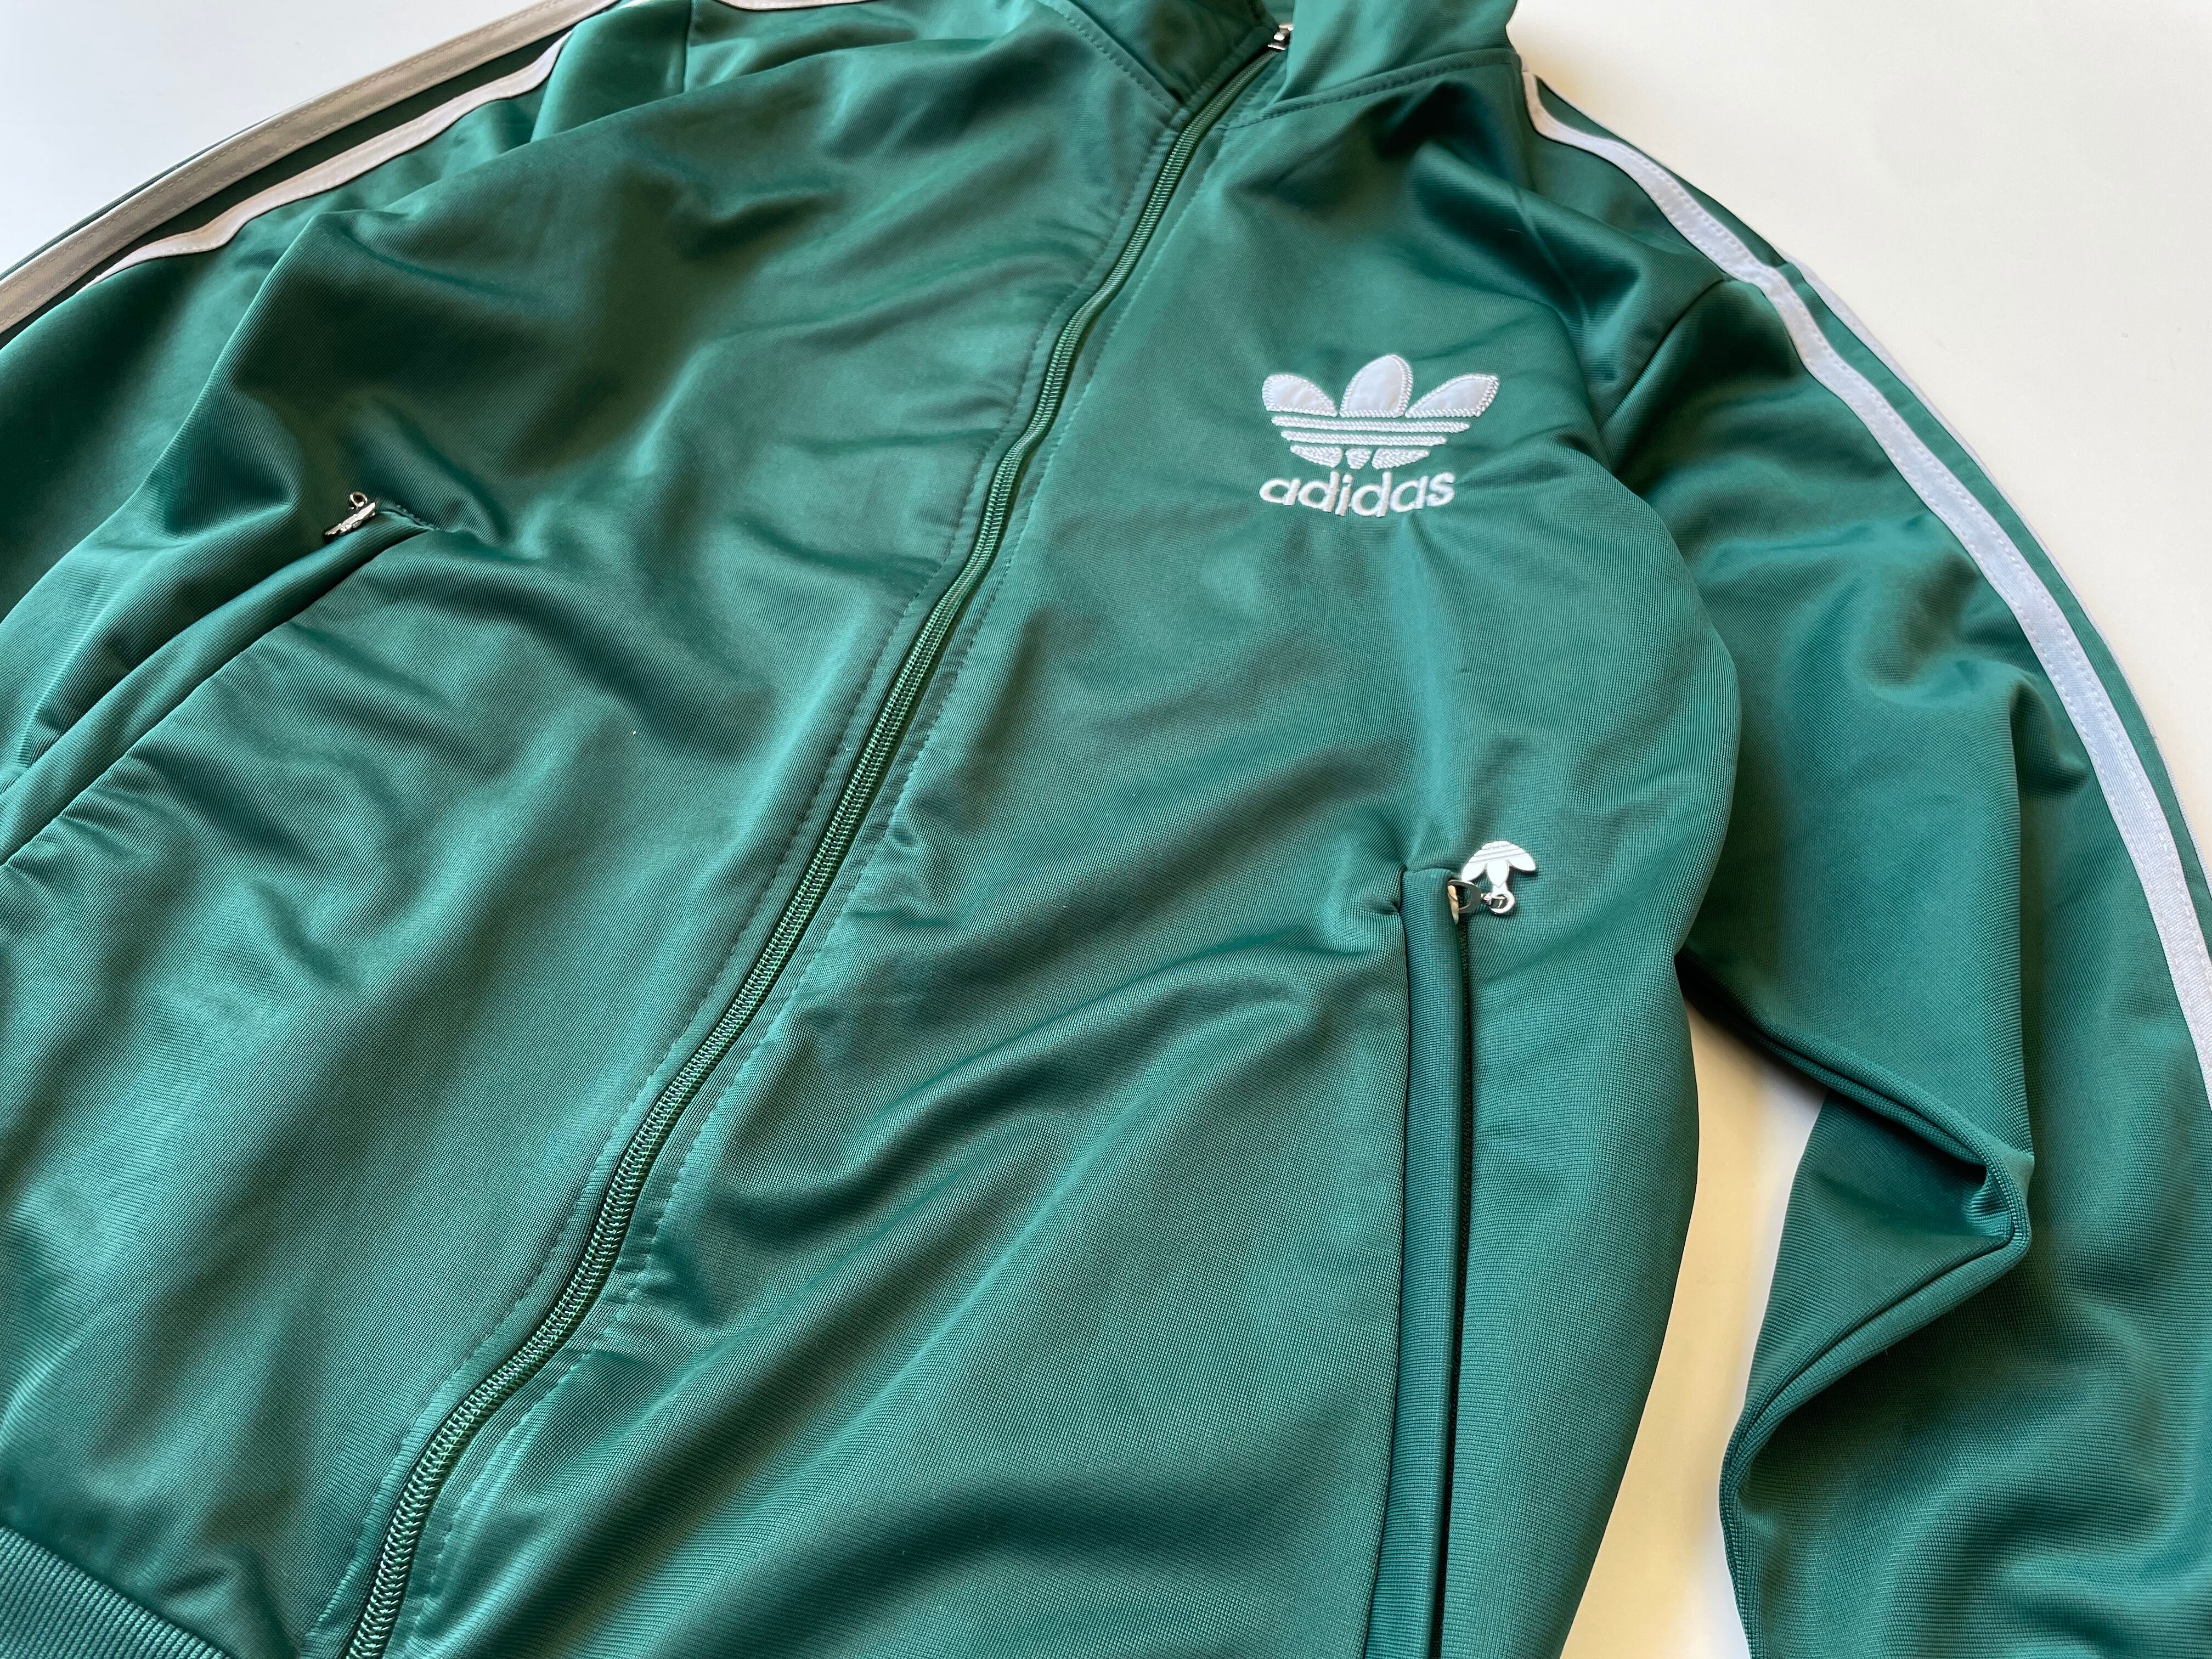 adidas track jacket col Green size M アディダス トラックジャケット 